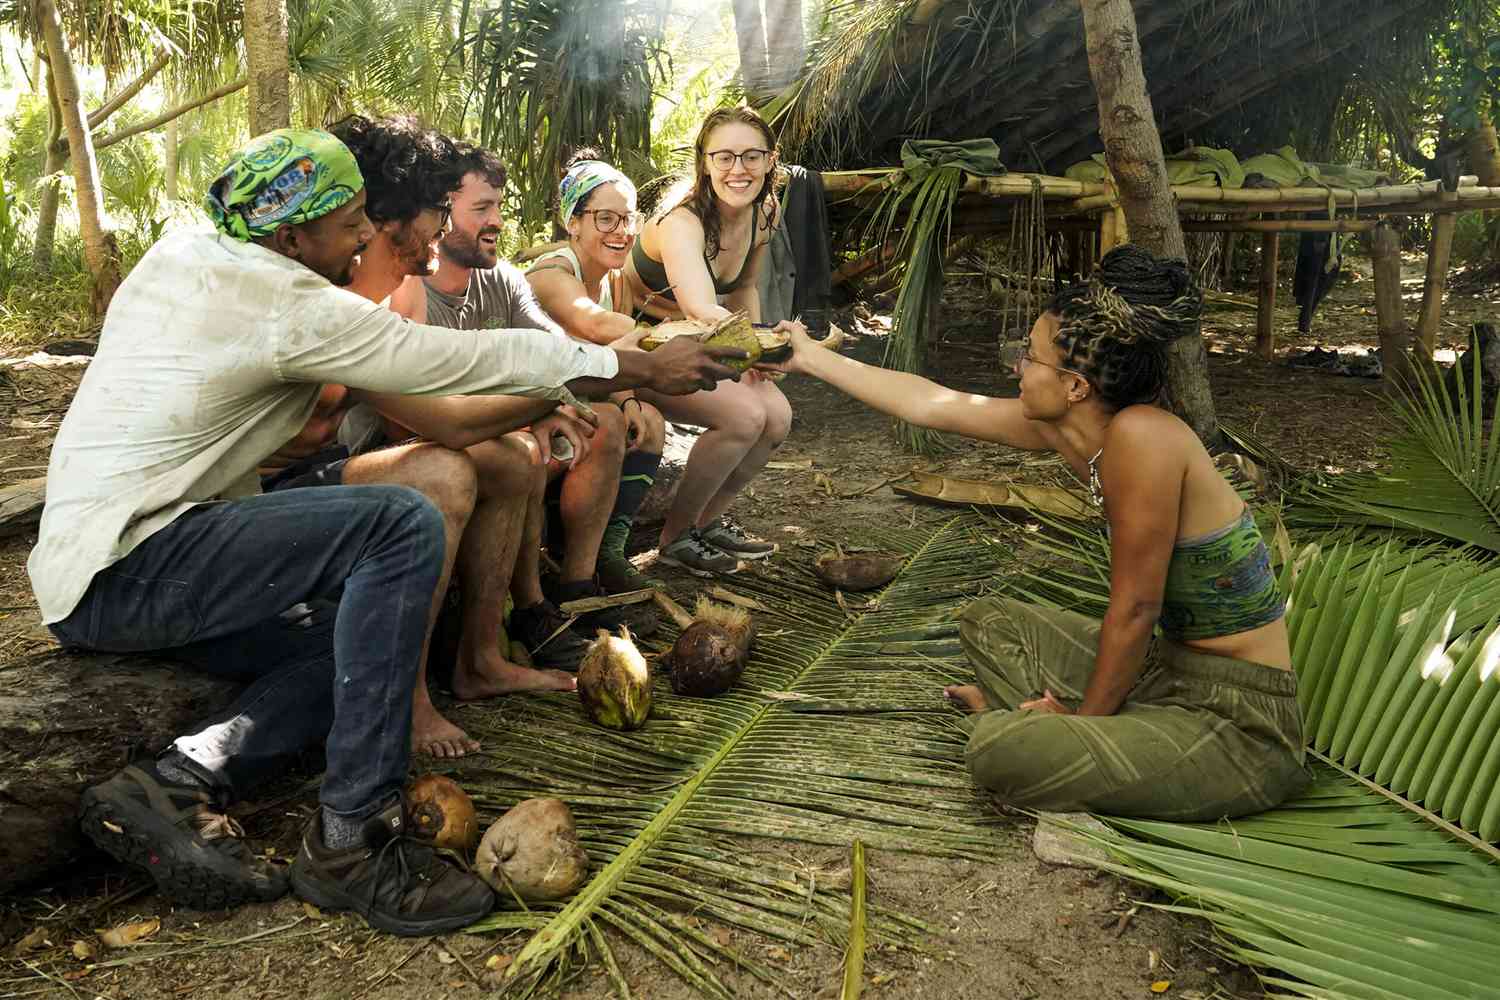 The Soka tribe on 'Survivor 44'